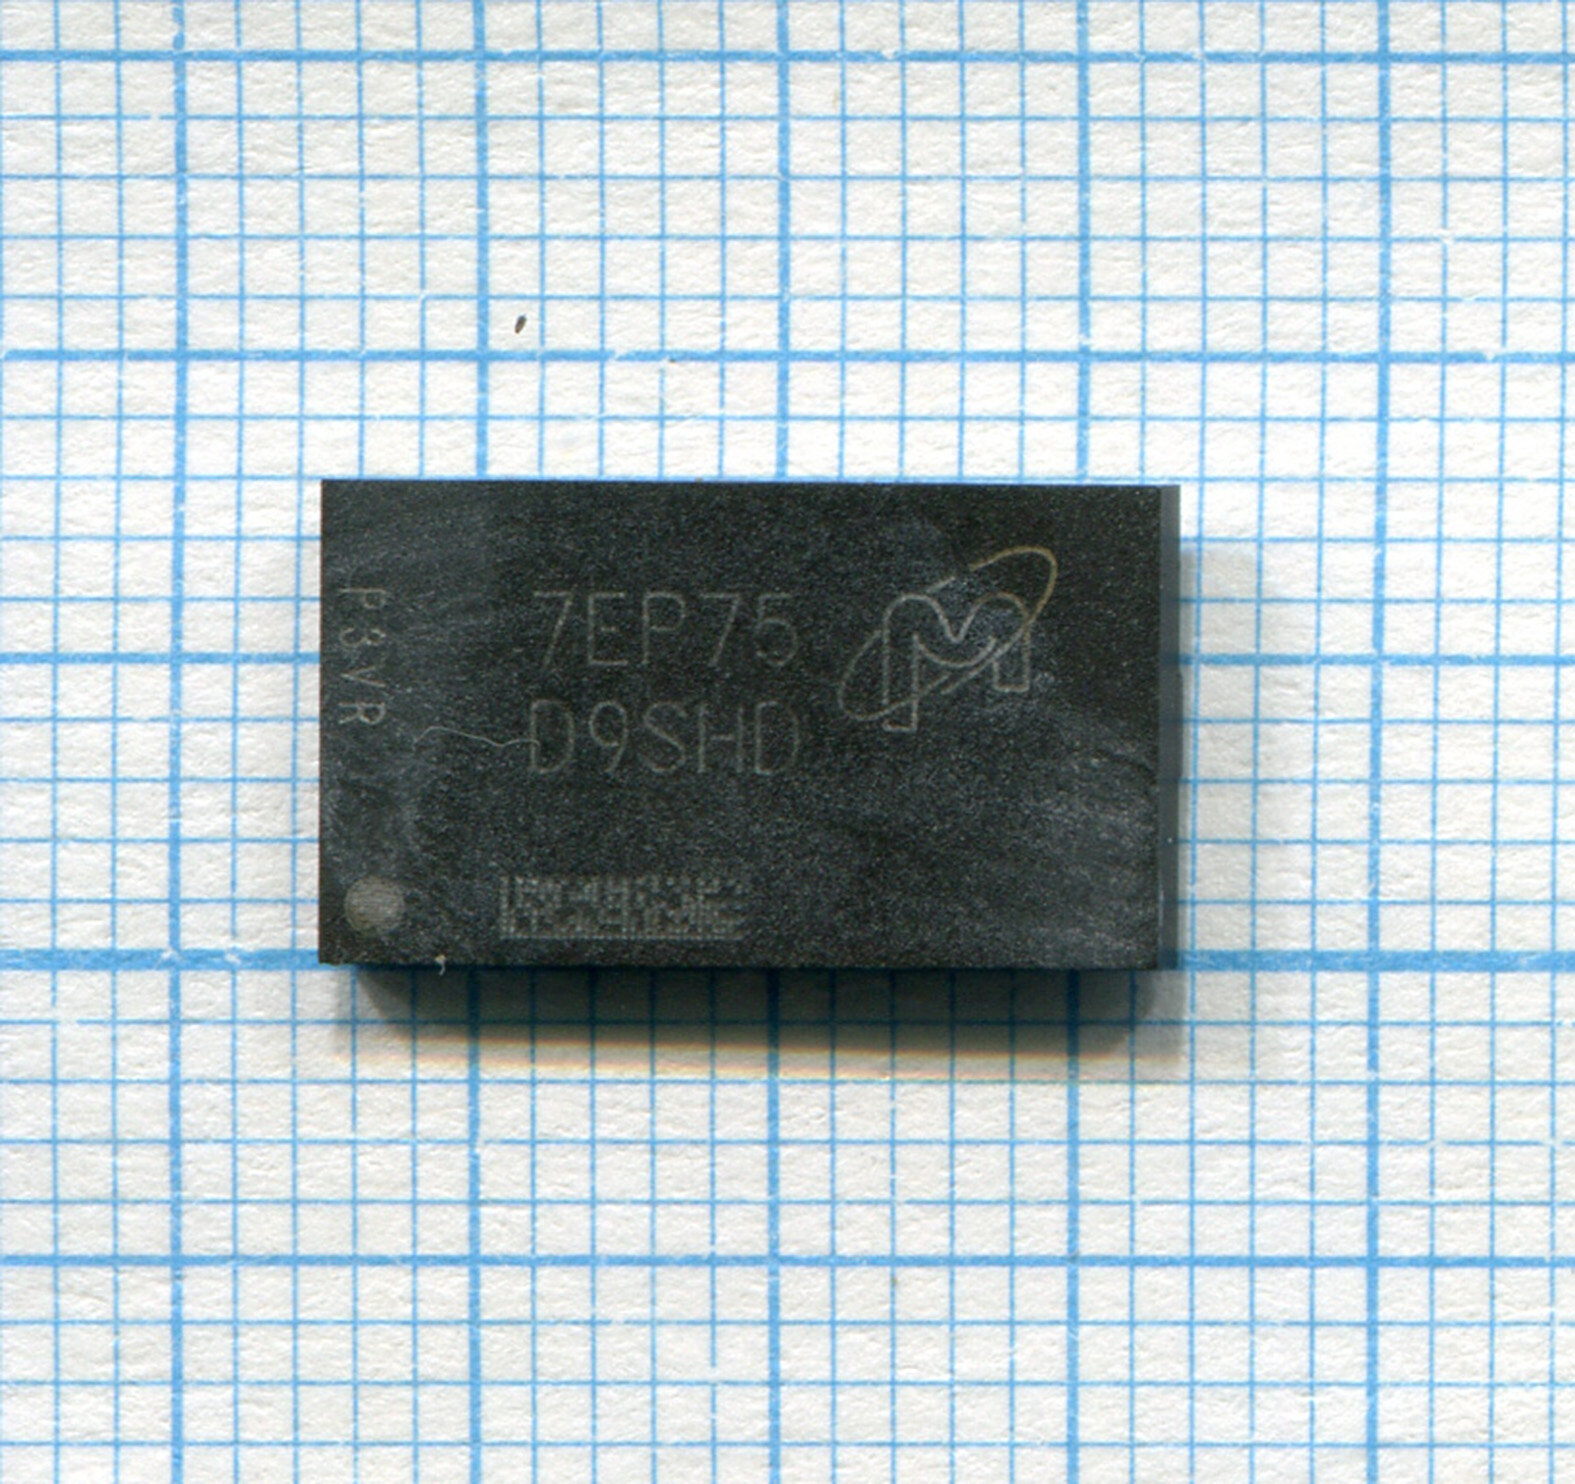 Оперативная память DDR3-1866 512MB MT41K256M16TW-107: P D9SHD с разбора